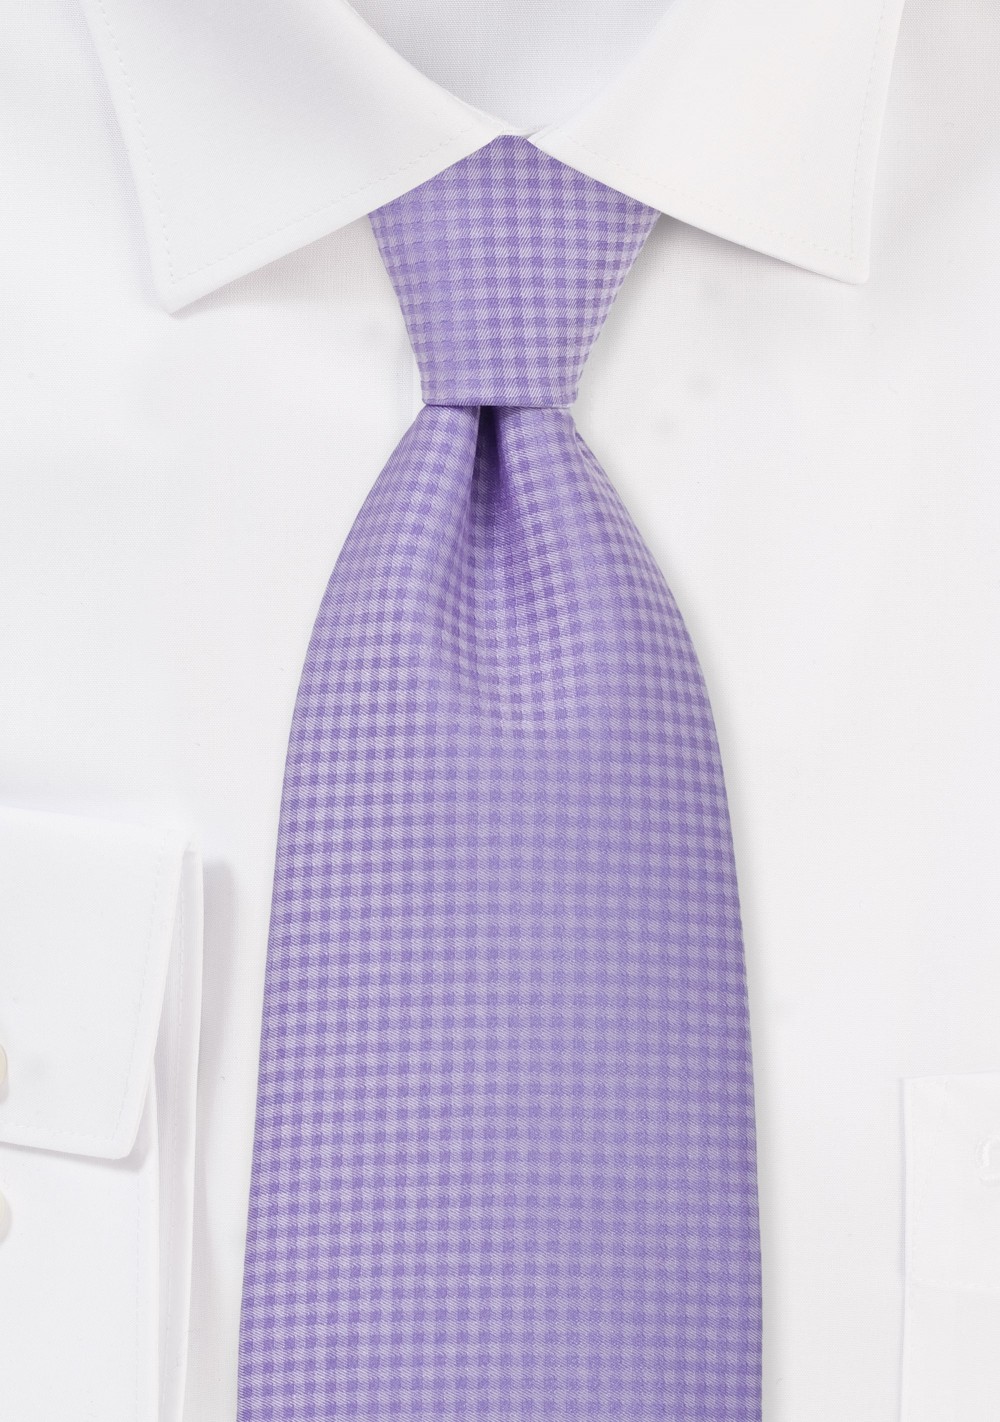 Light Lavender Mens Necktie